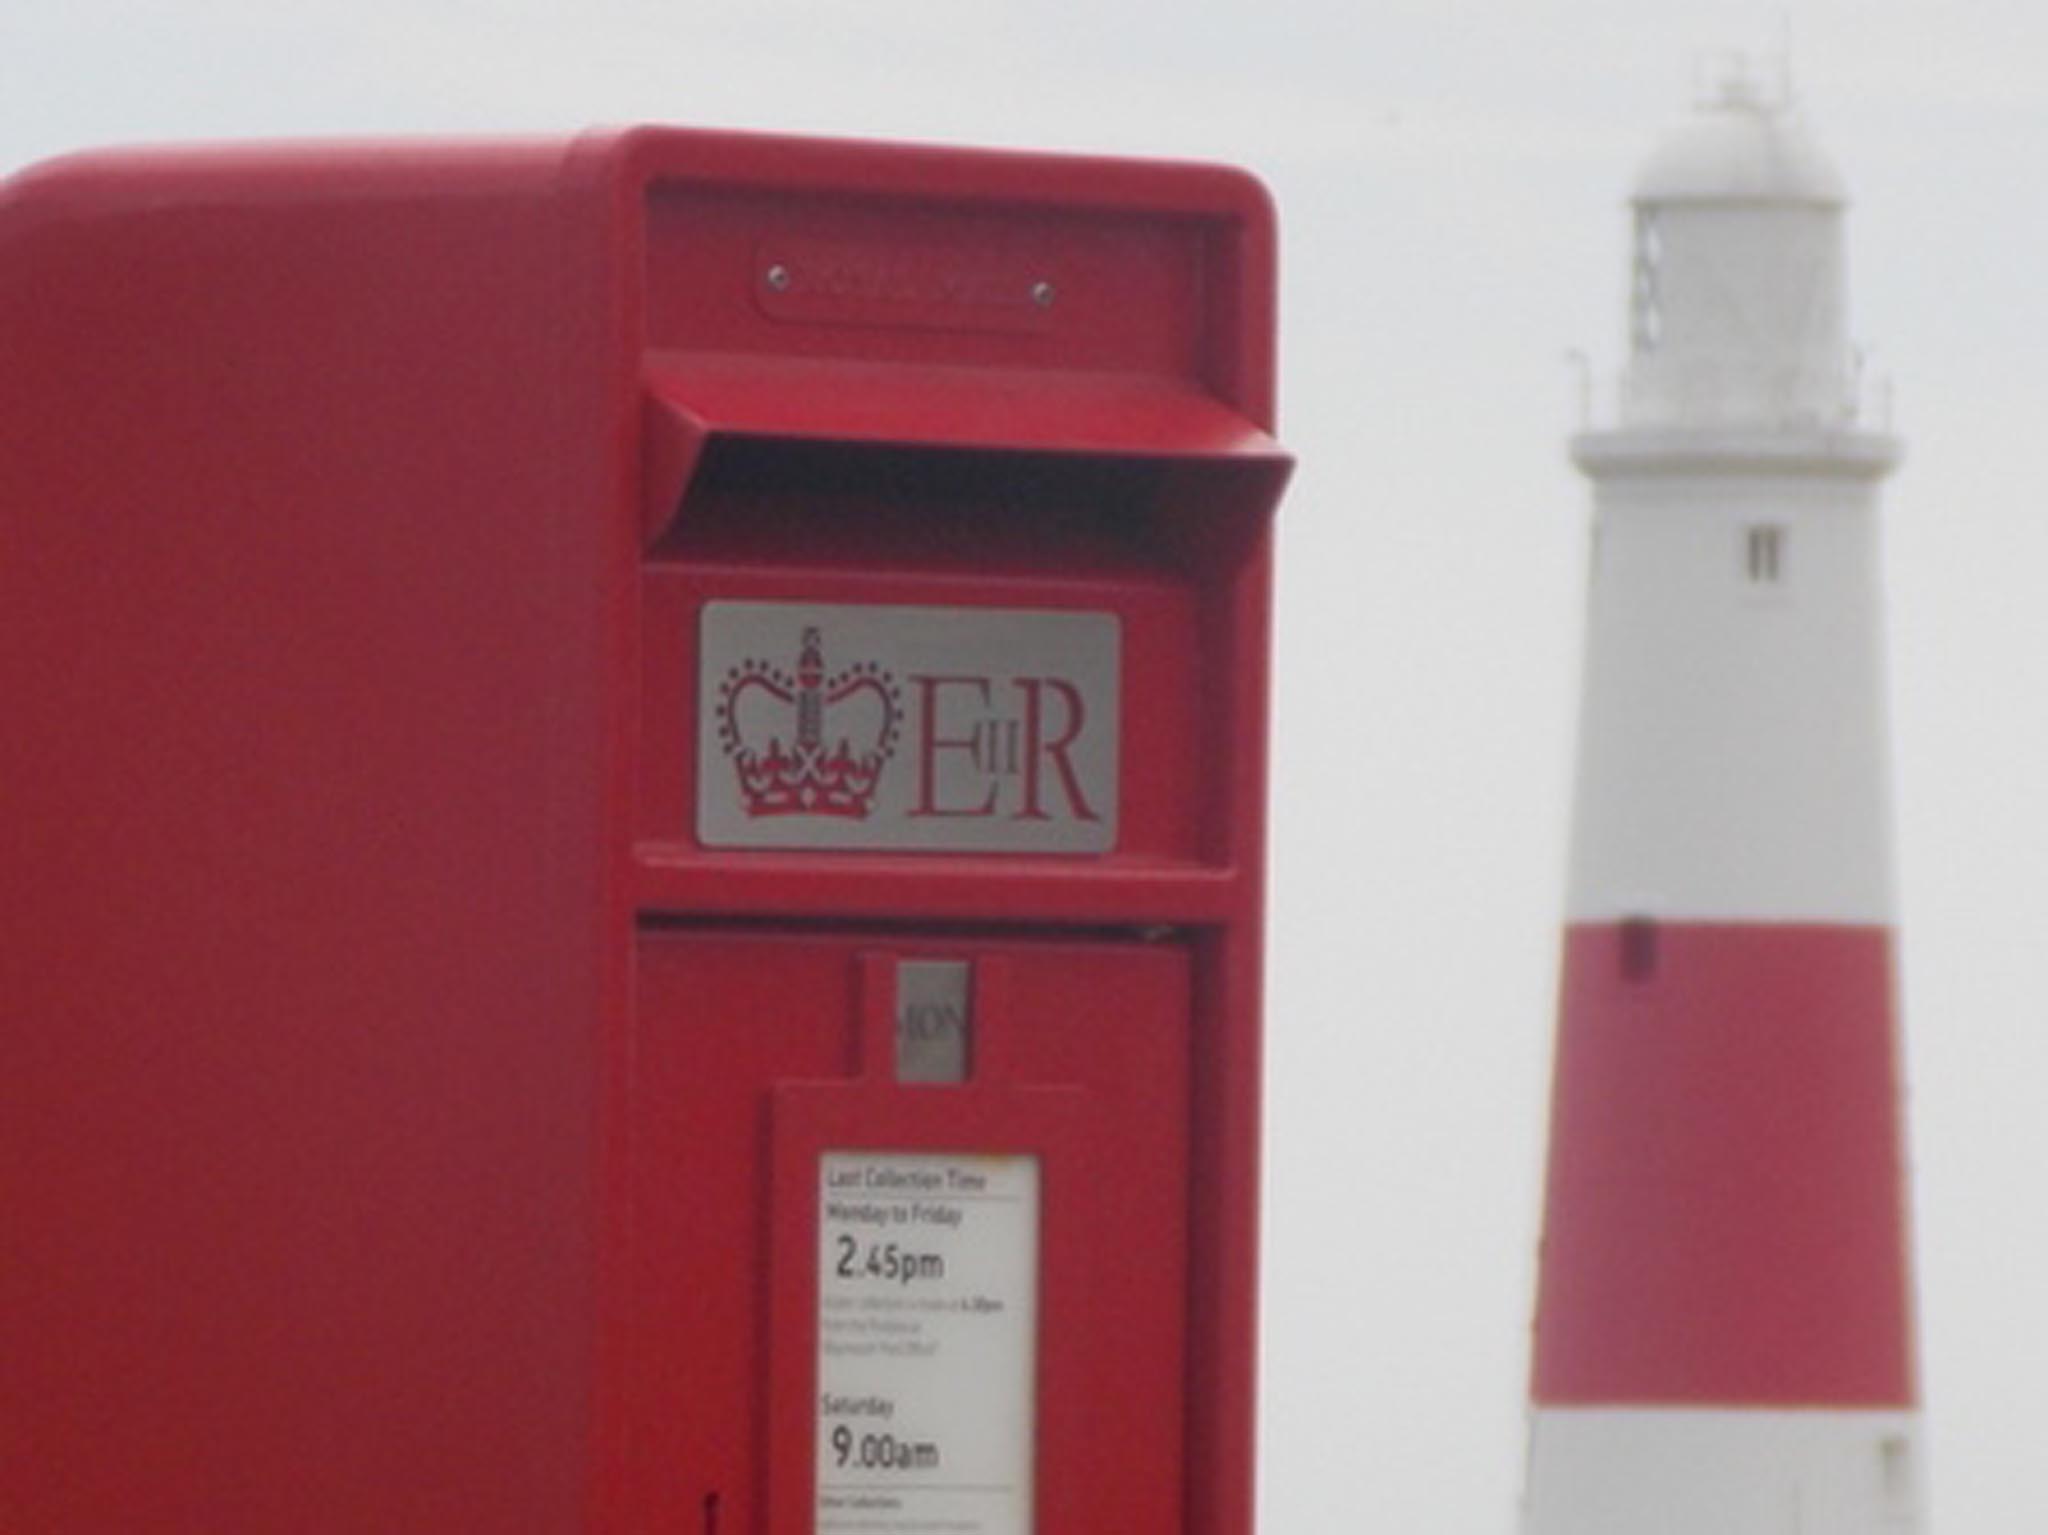 E2R lamp box, 2010s, Dorset. Chris Downer